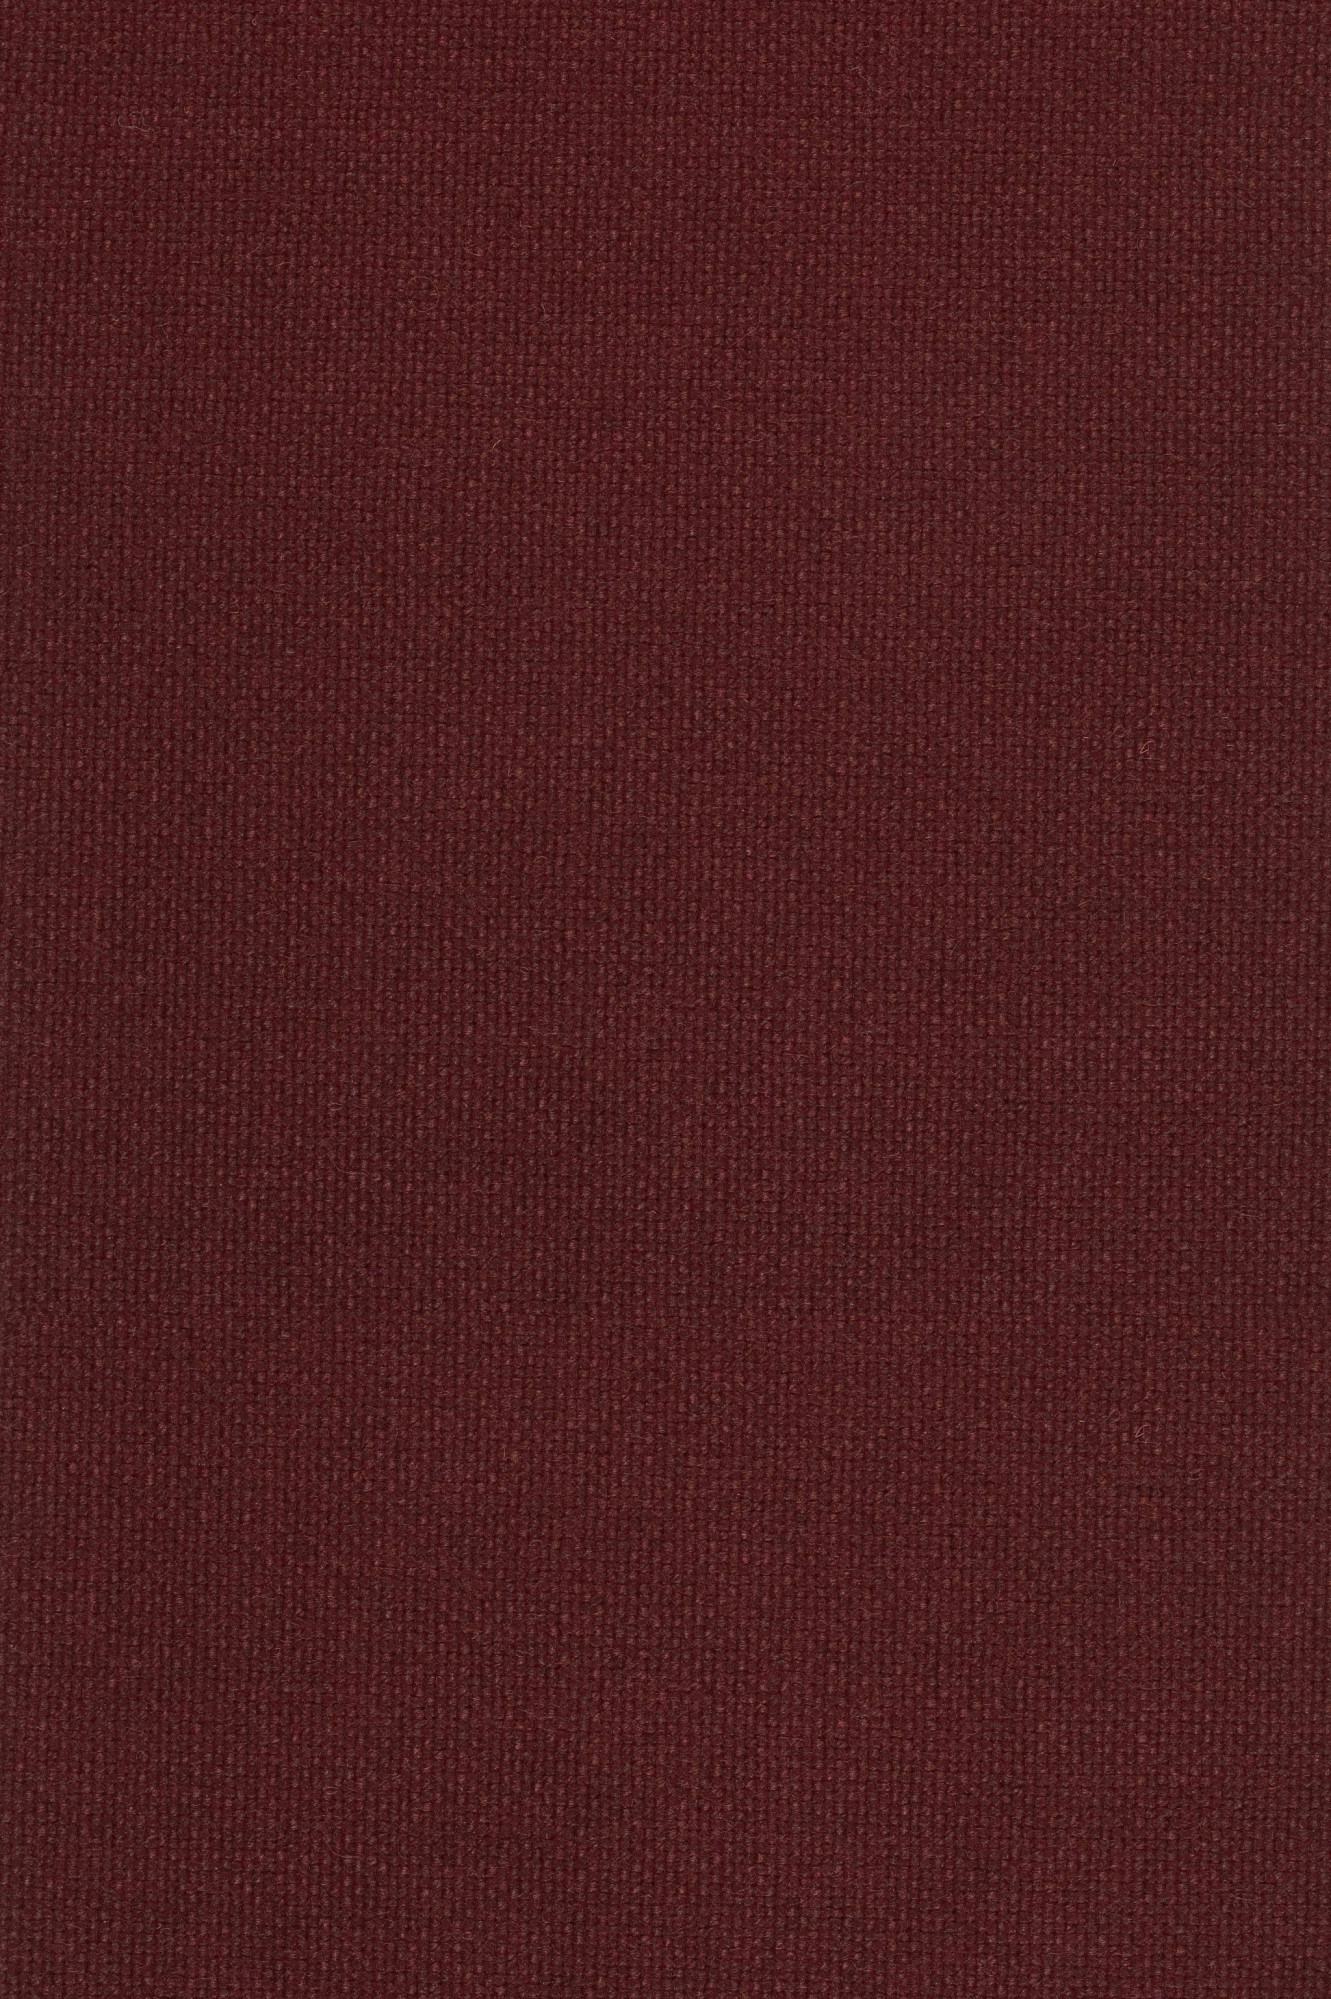 Fabric sample Hallingdal 65 694 red